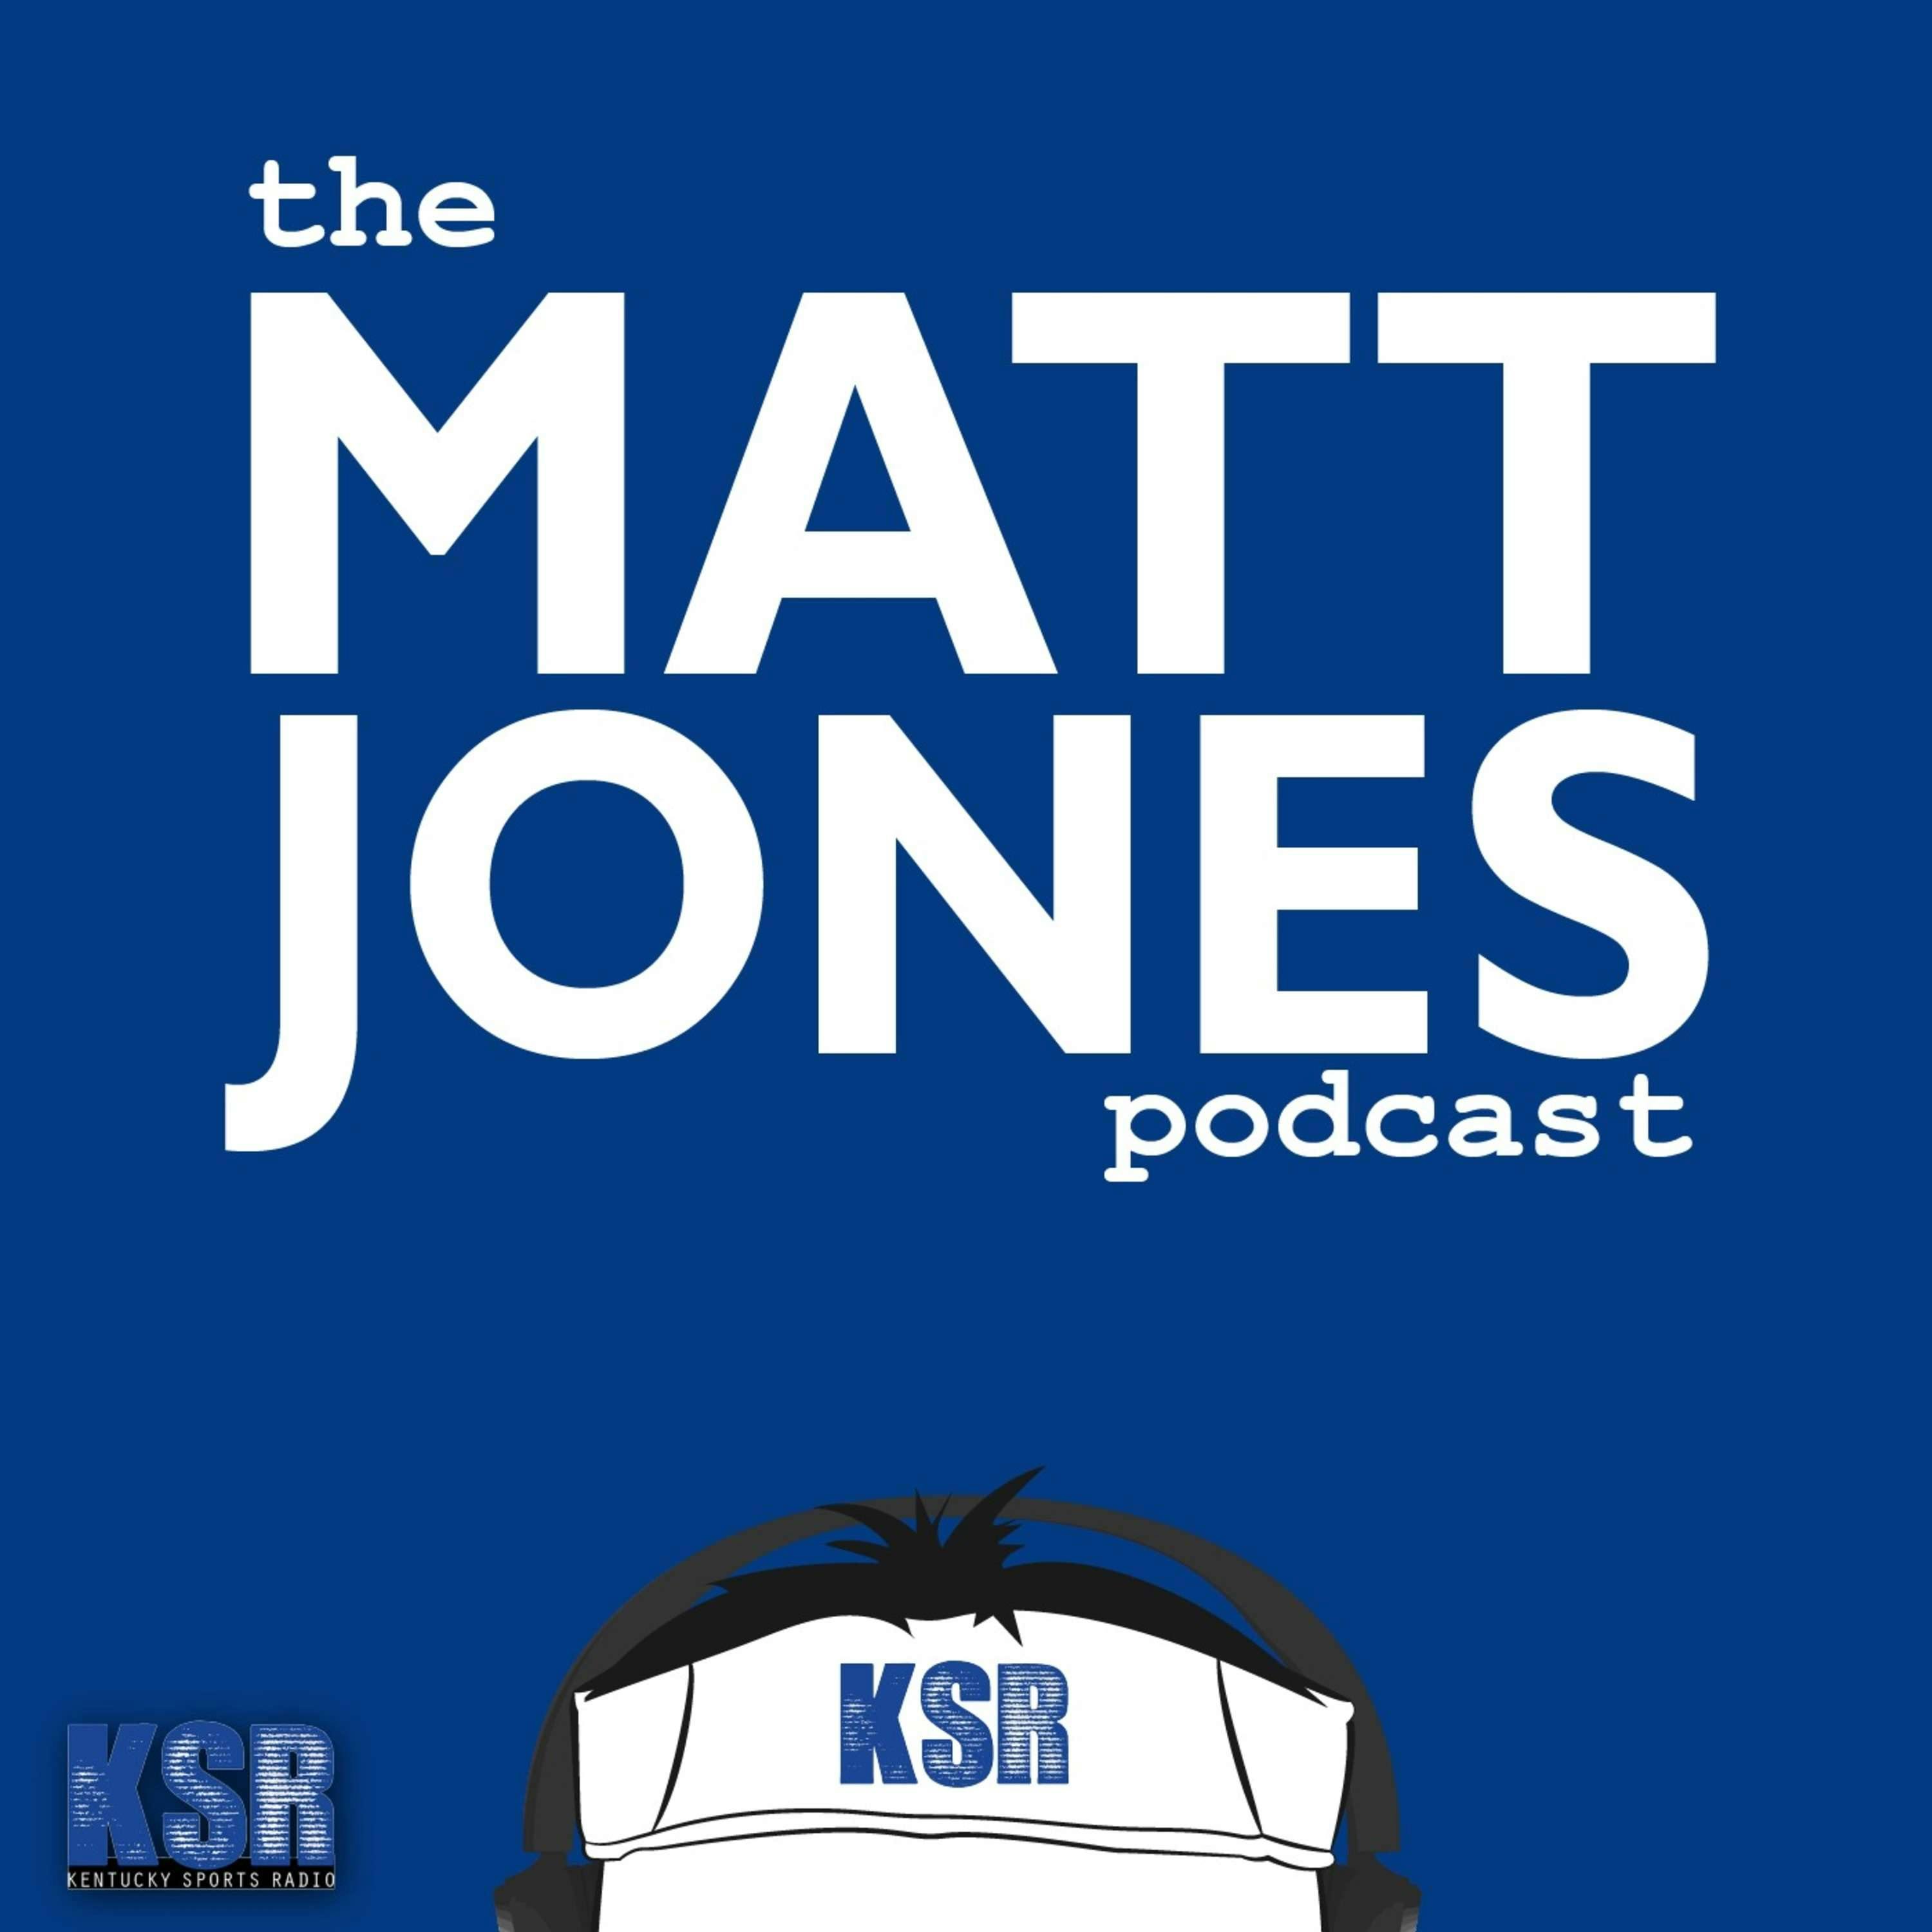 The Matt Jones Podcast: E51 Ramel Bradley & SEC Media Days with Freddie & Nick